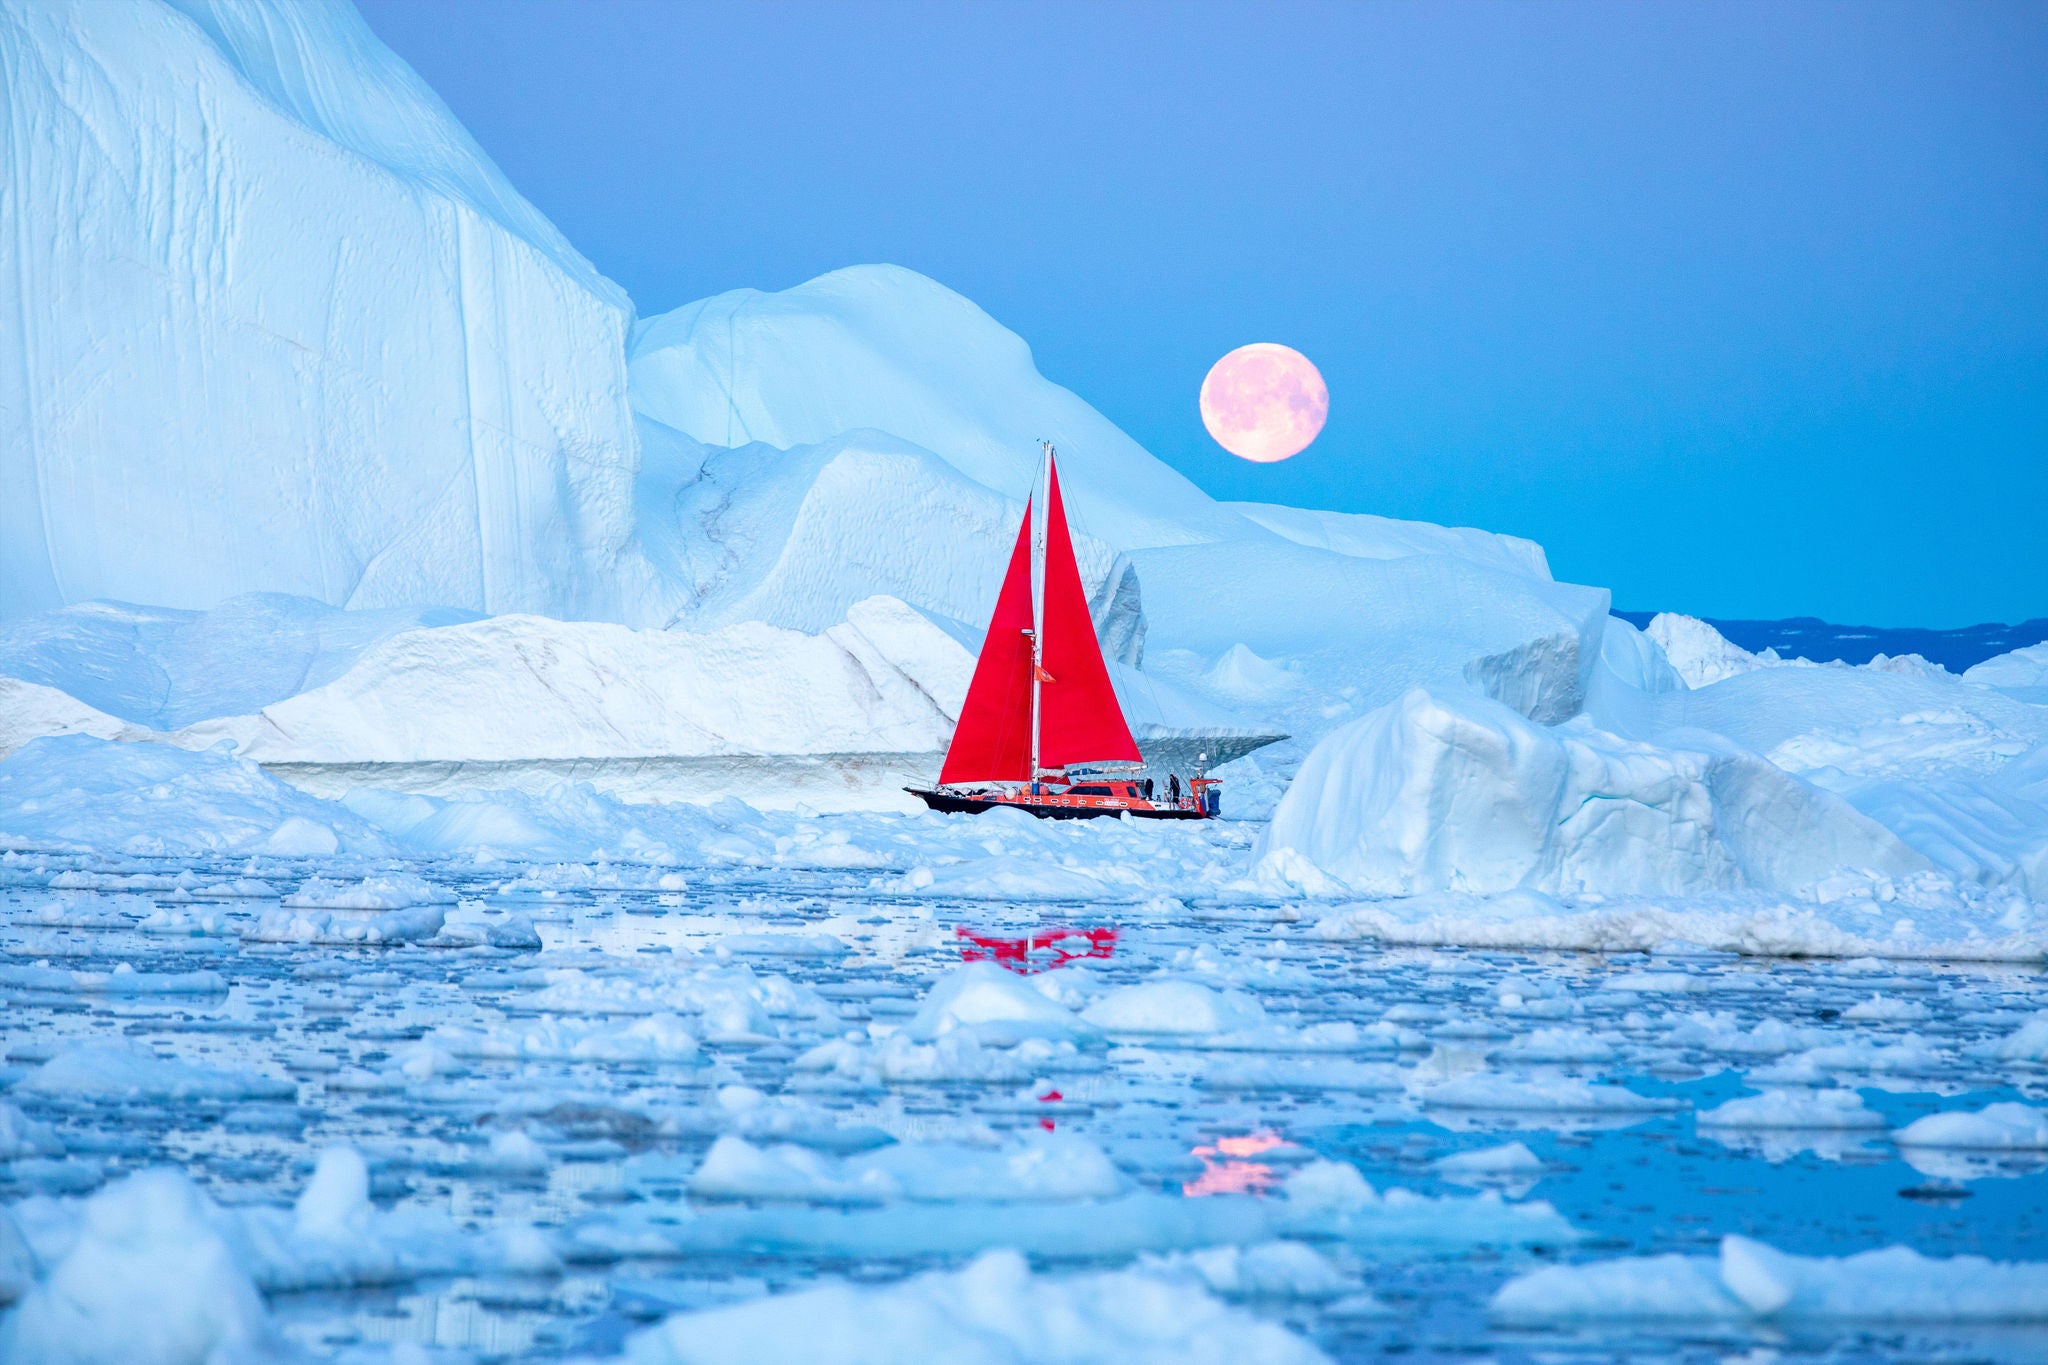 Little red sailboat cruising among floating icebergs